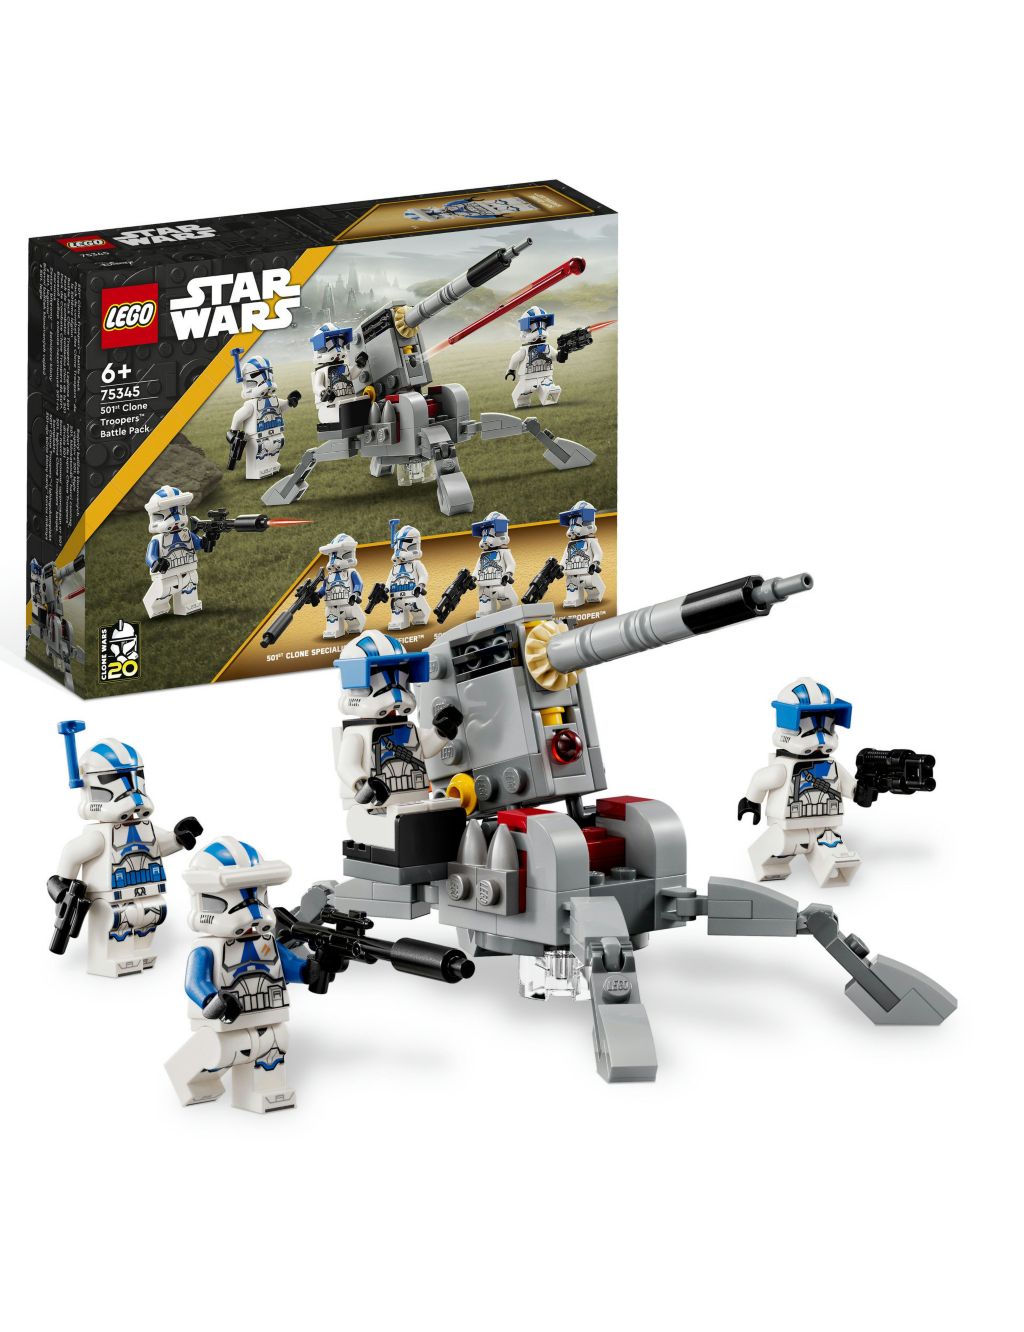 LEGO Star Wars 501st Clone Trooper Battle Pack (6+Yrs) image 1